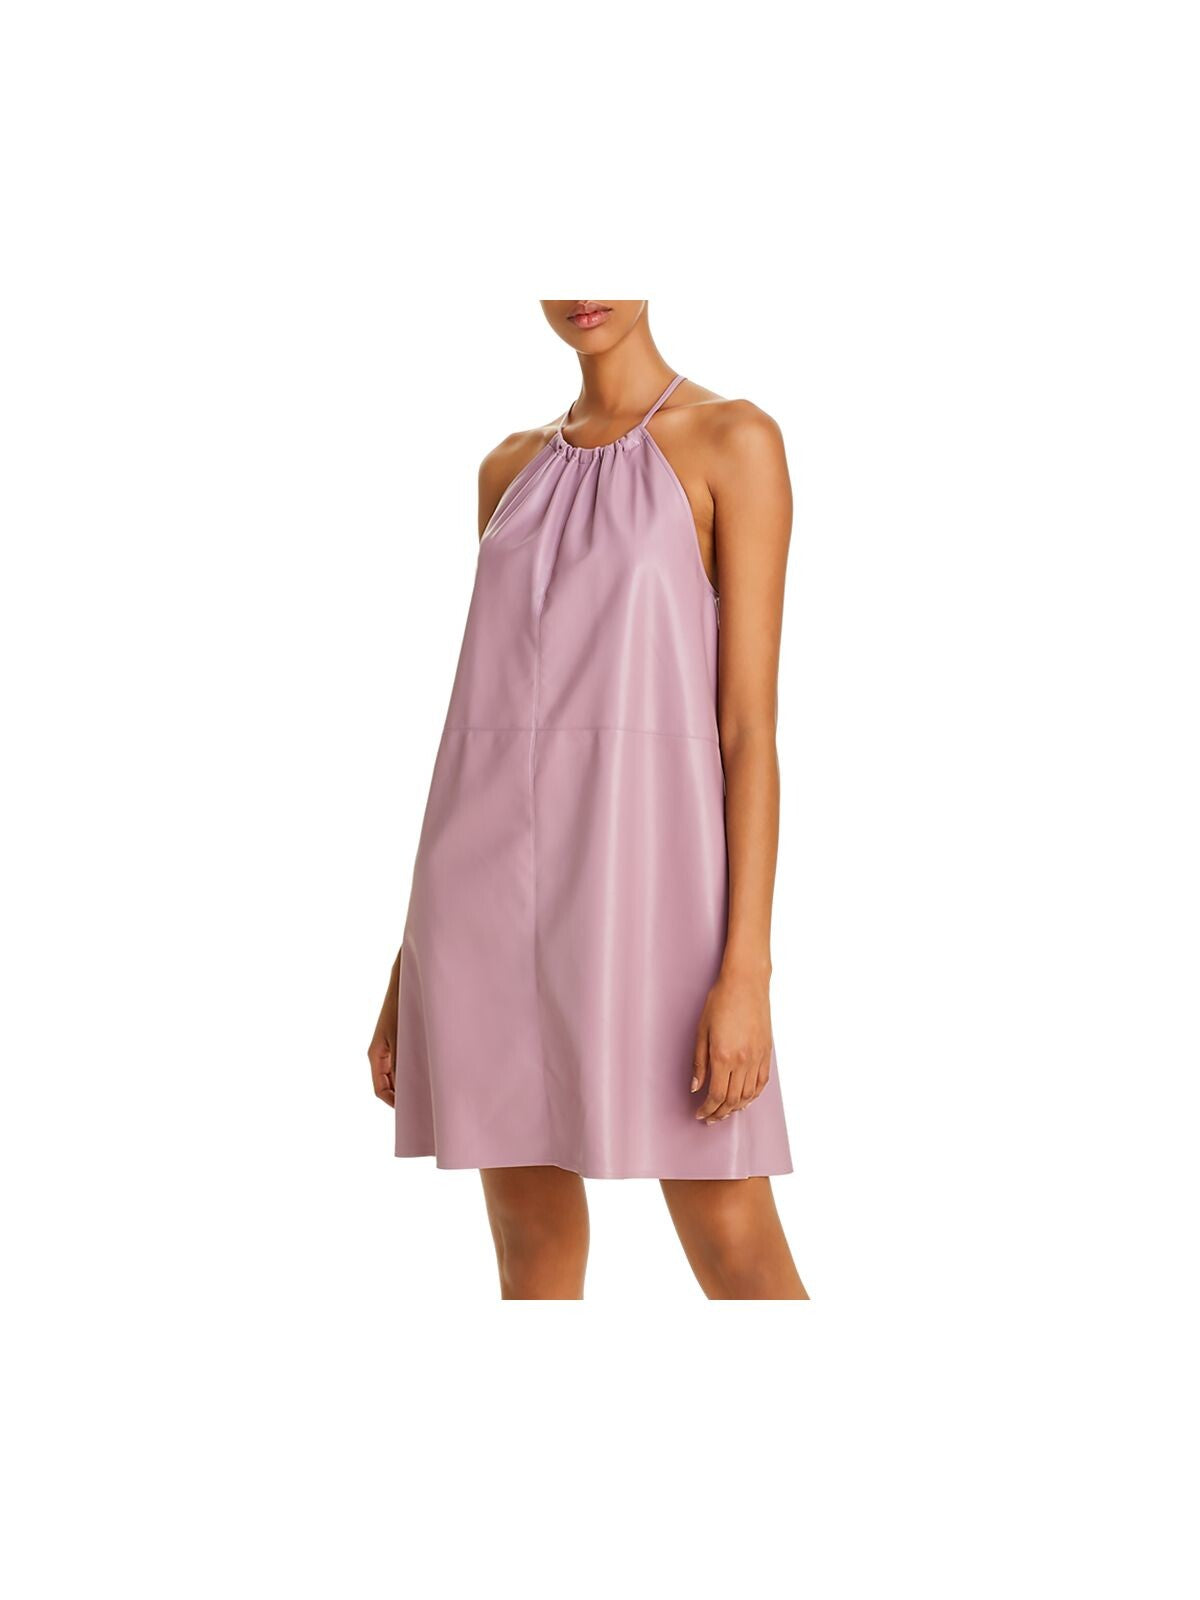 Áeron Womens Pink Sleeveless Halter Above The Knee Shift Dress Size: 34